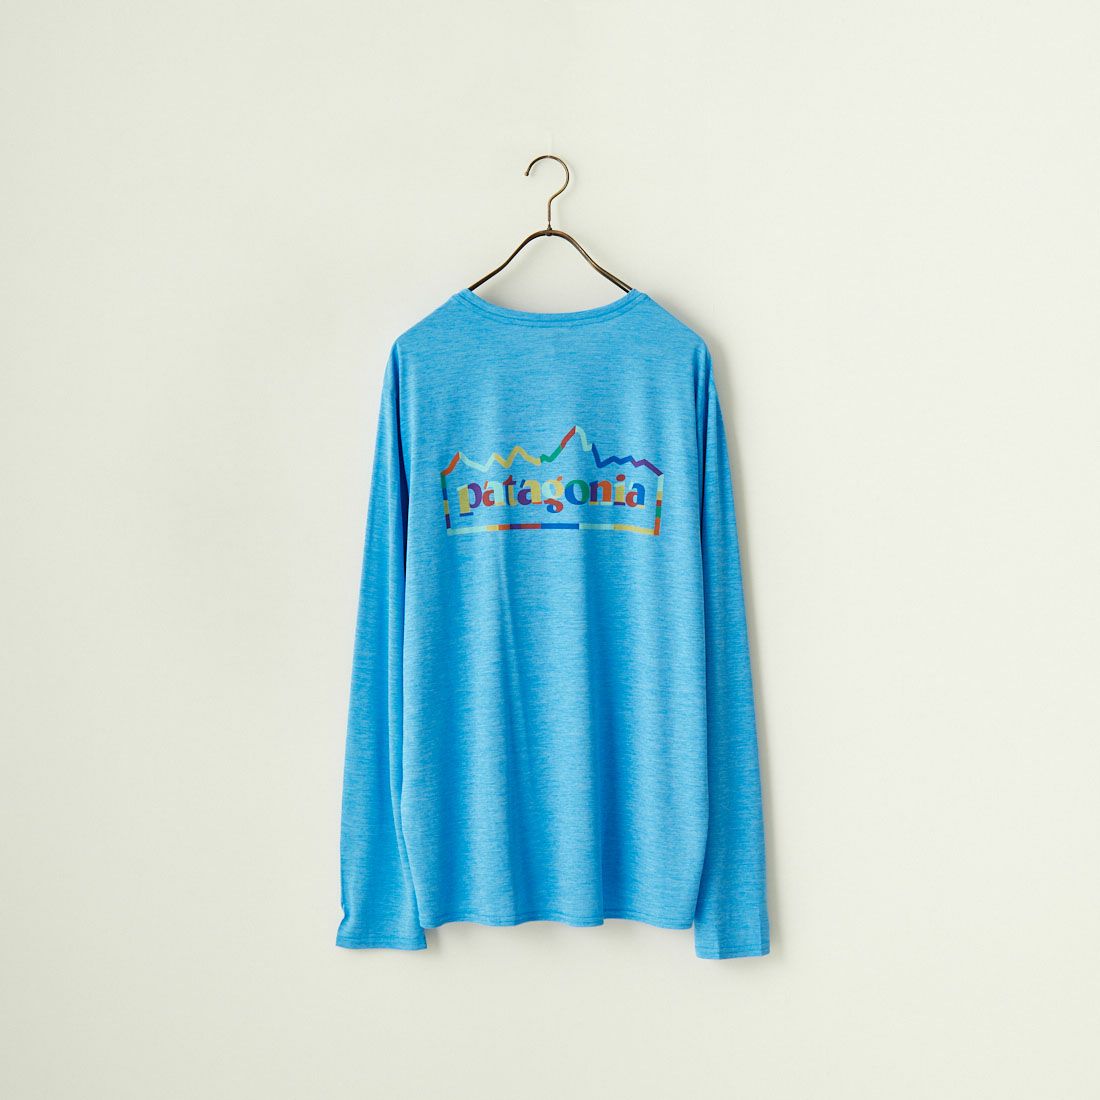 patagonia [パタゴニア] メンズ ロングスリーブ キャプリーン クールデイリーグラフィックTシャツ [45190]